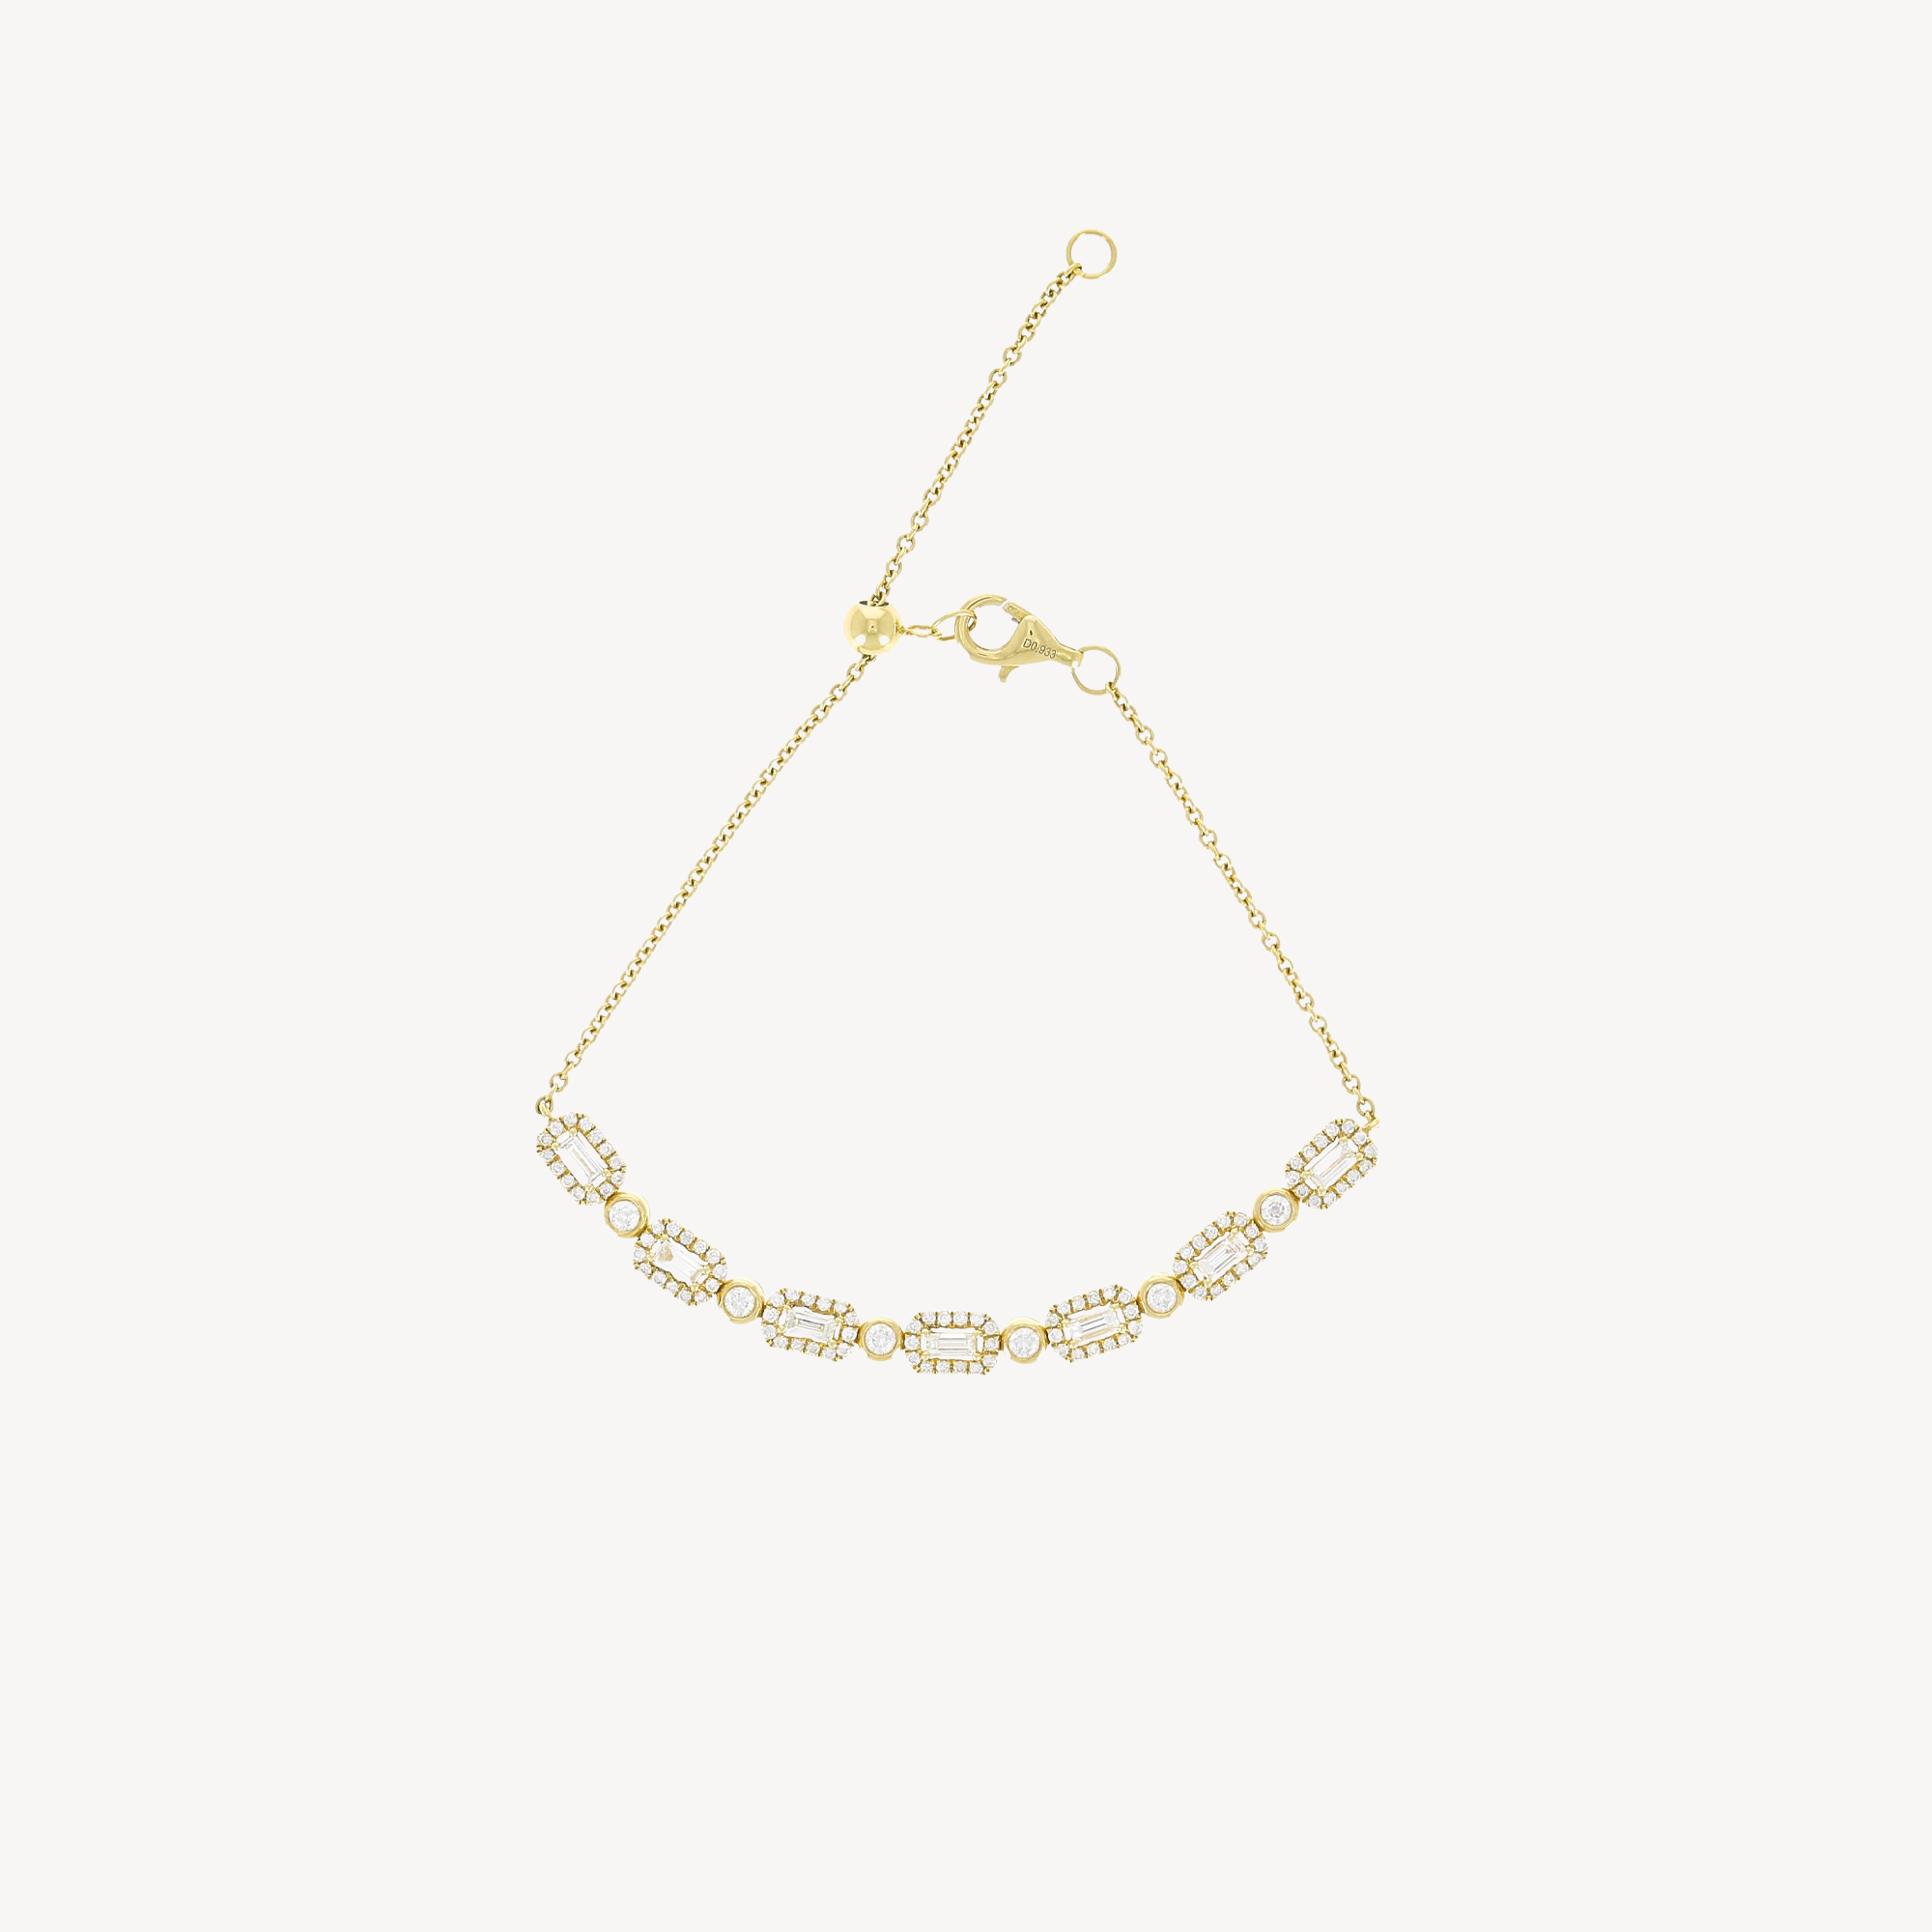 Adjustable Chain with 5 Links Bracelet